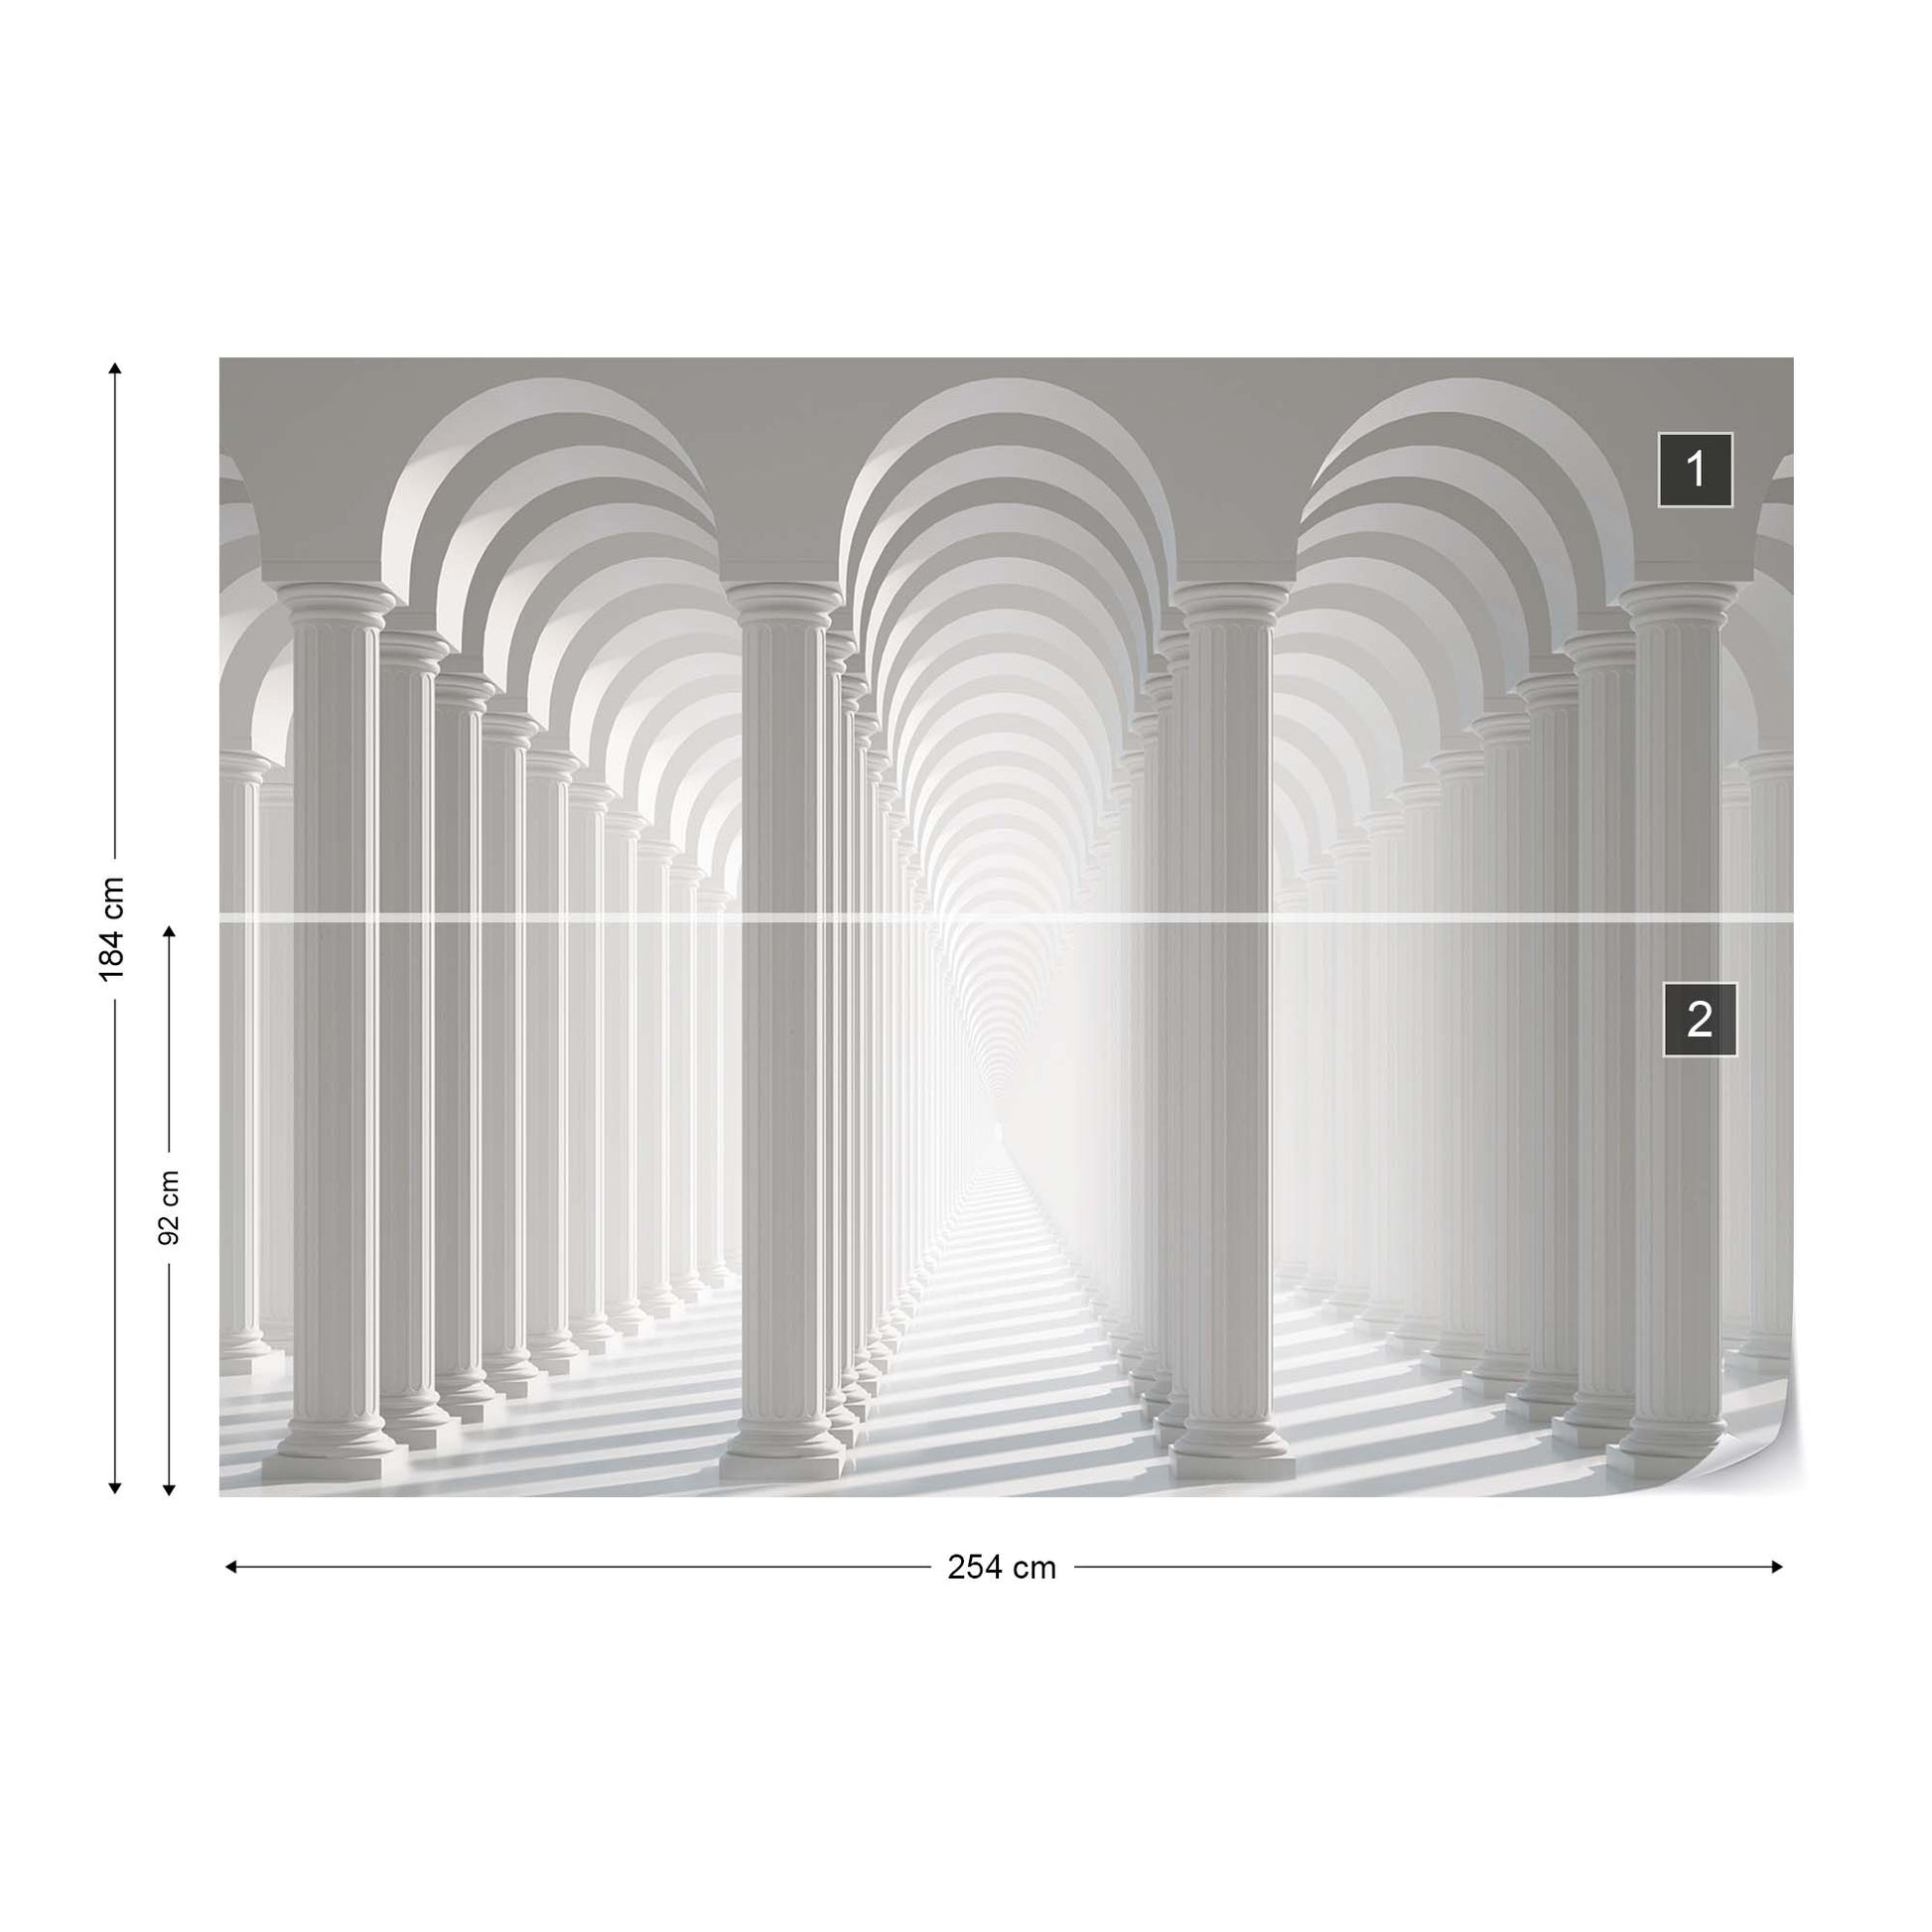 3D Columns Optical Illusion Photo Wallpaper Wall Mural - USTAD HOME